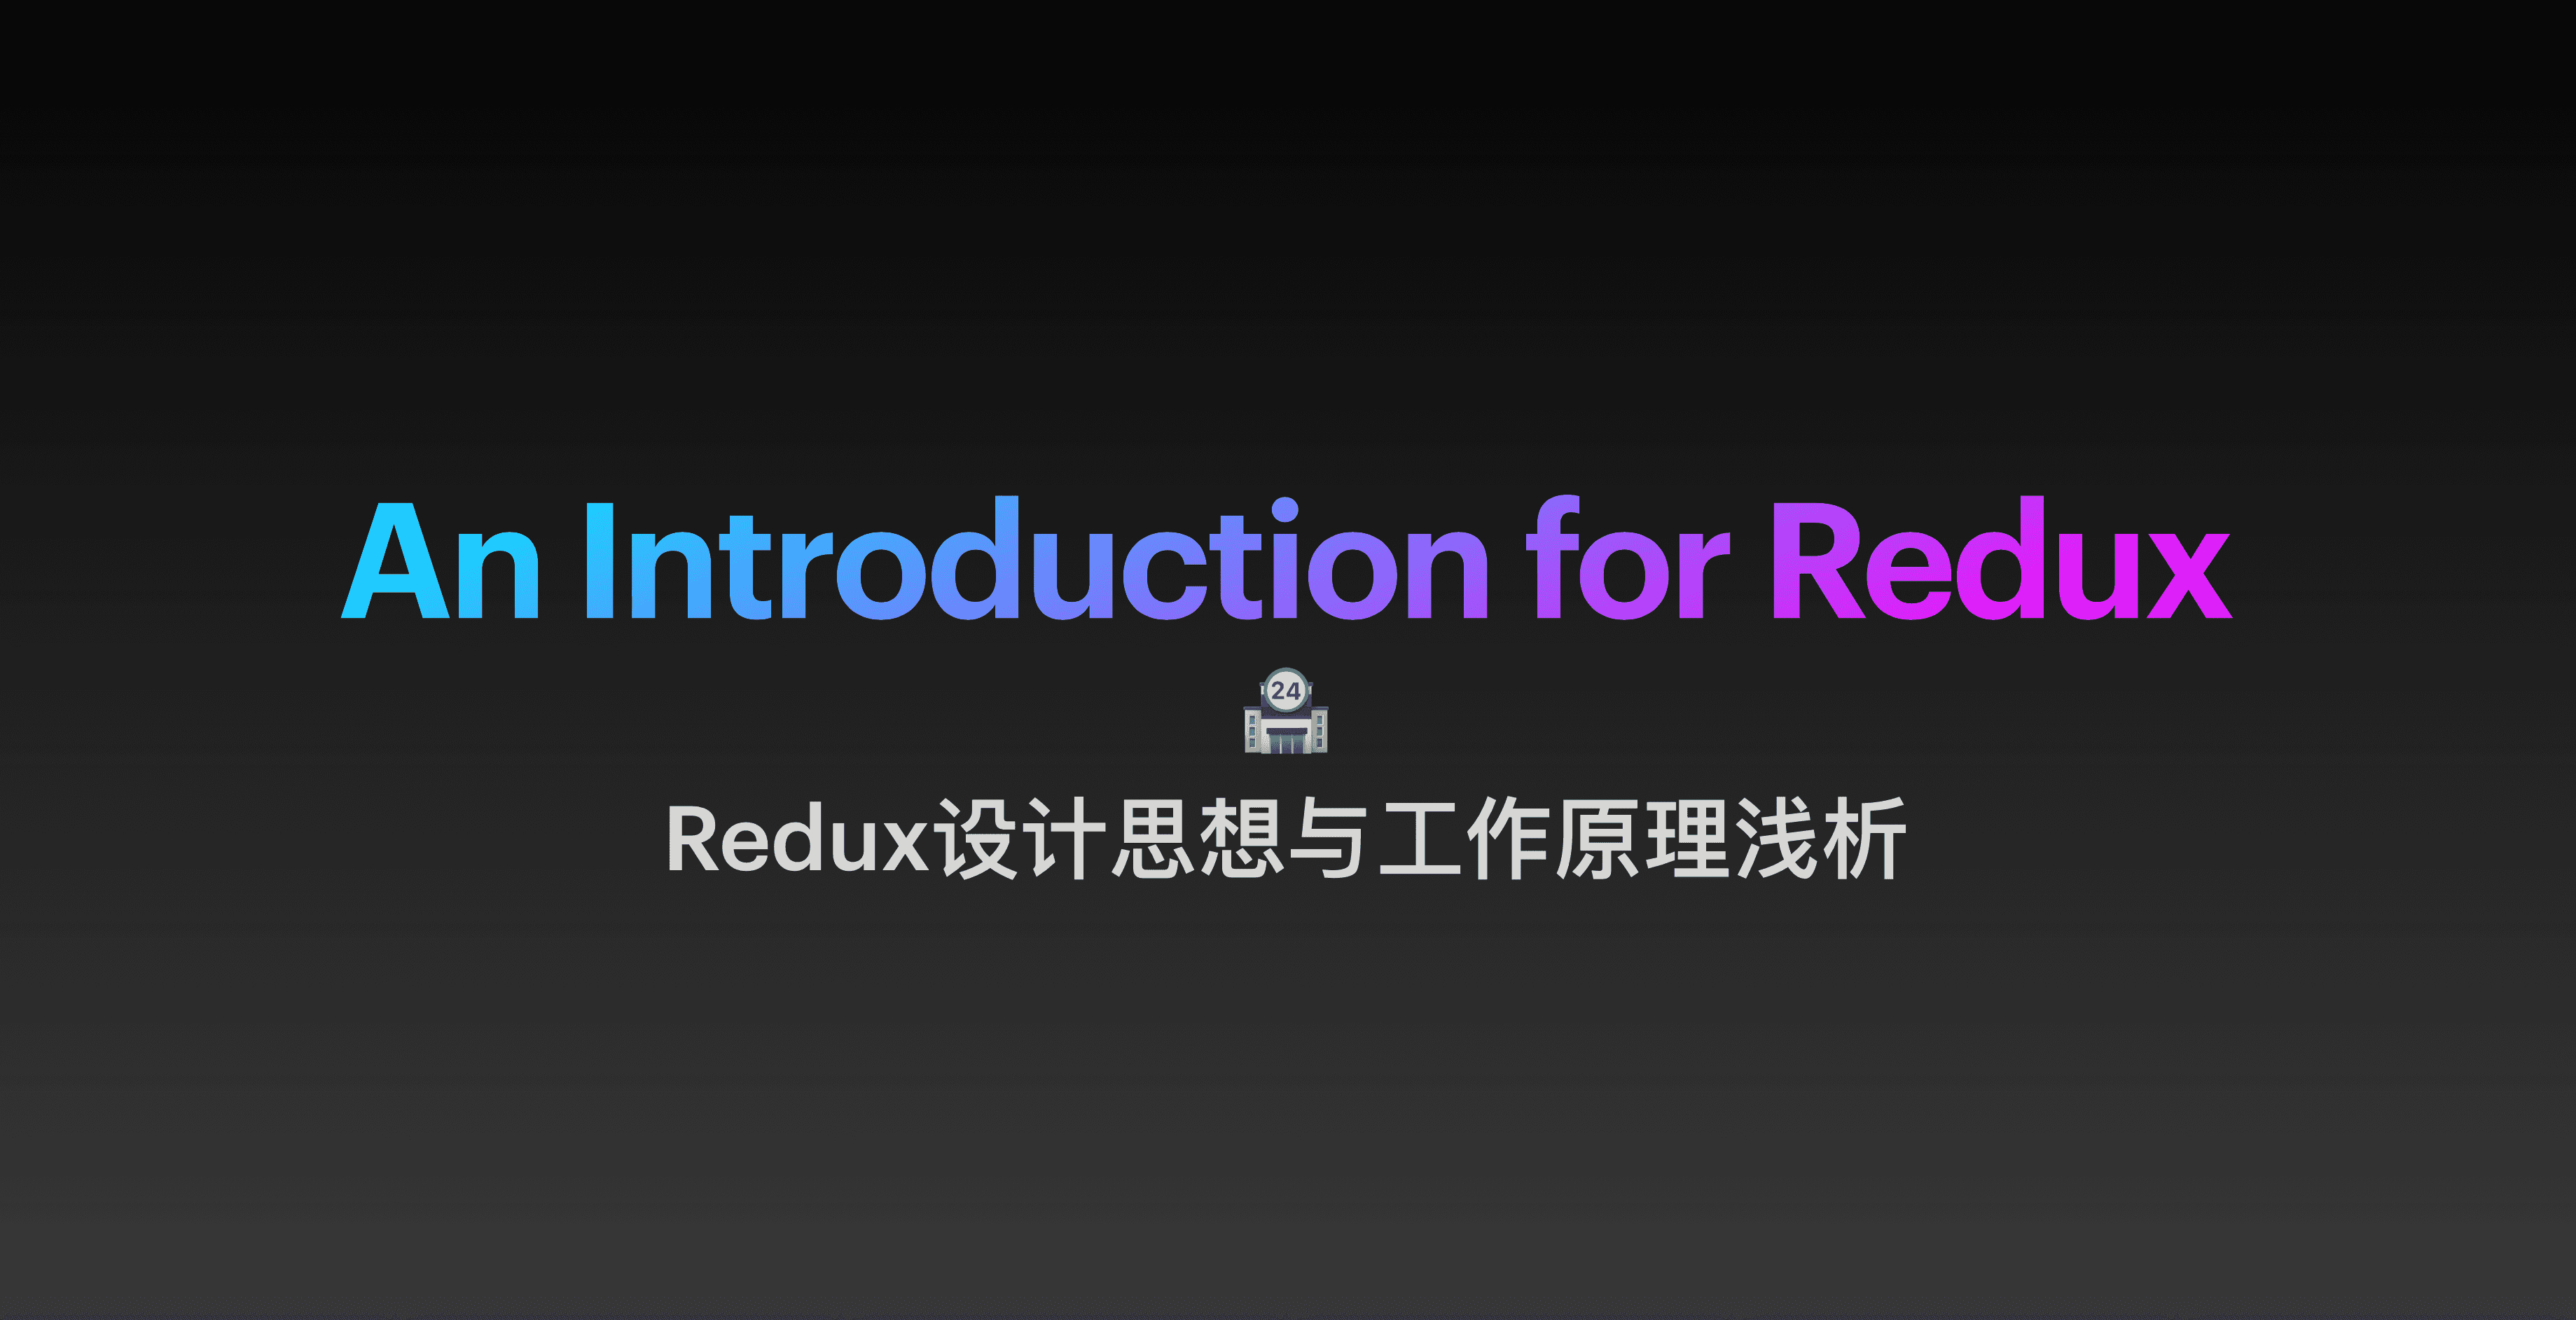 Redux设计思想与工作原理